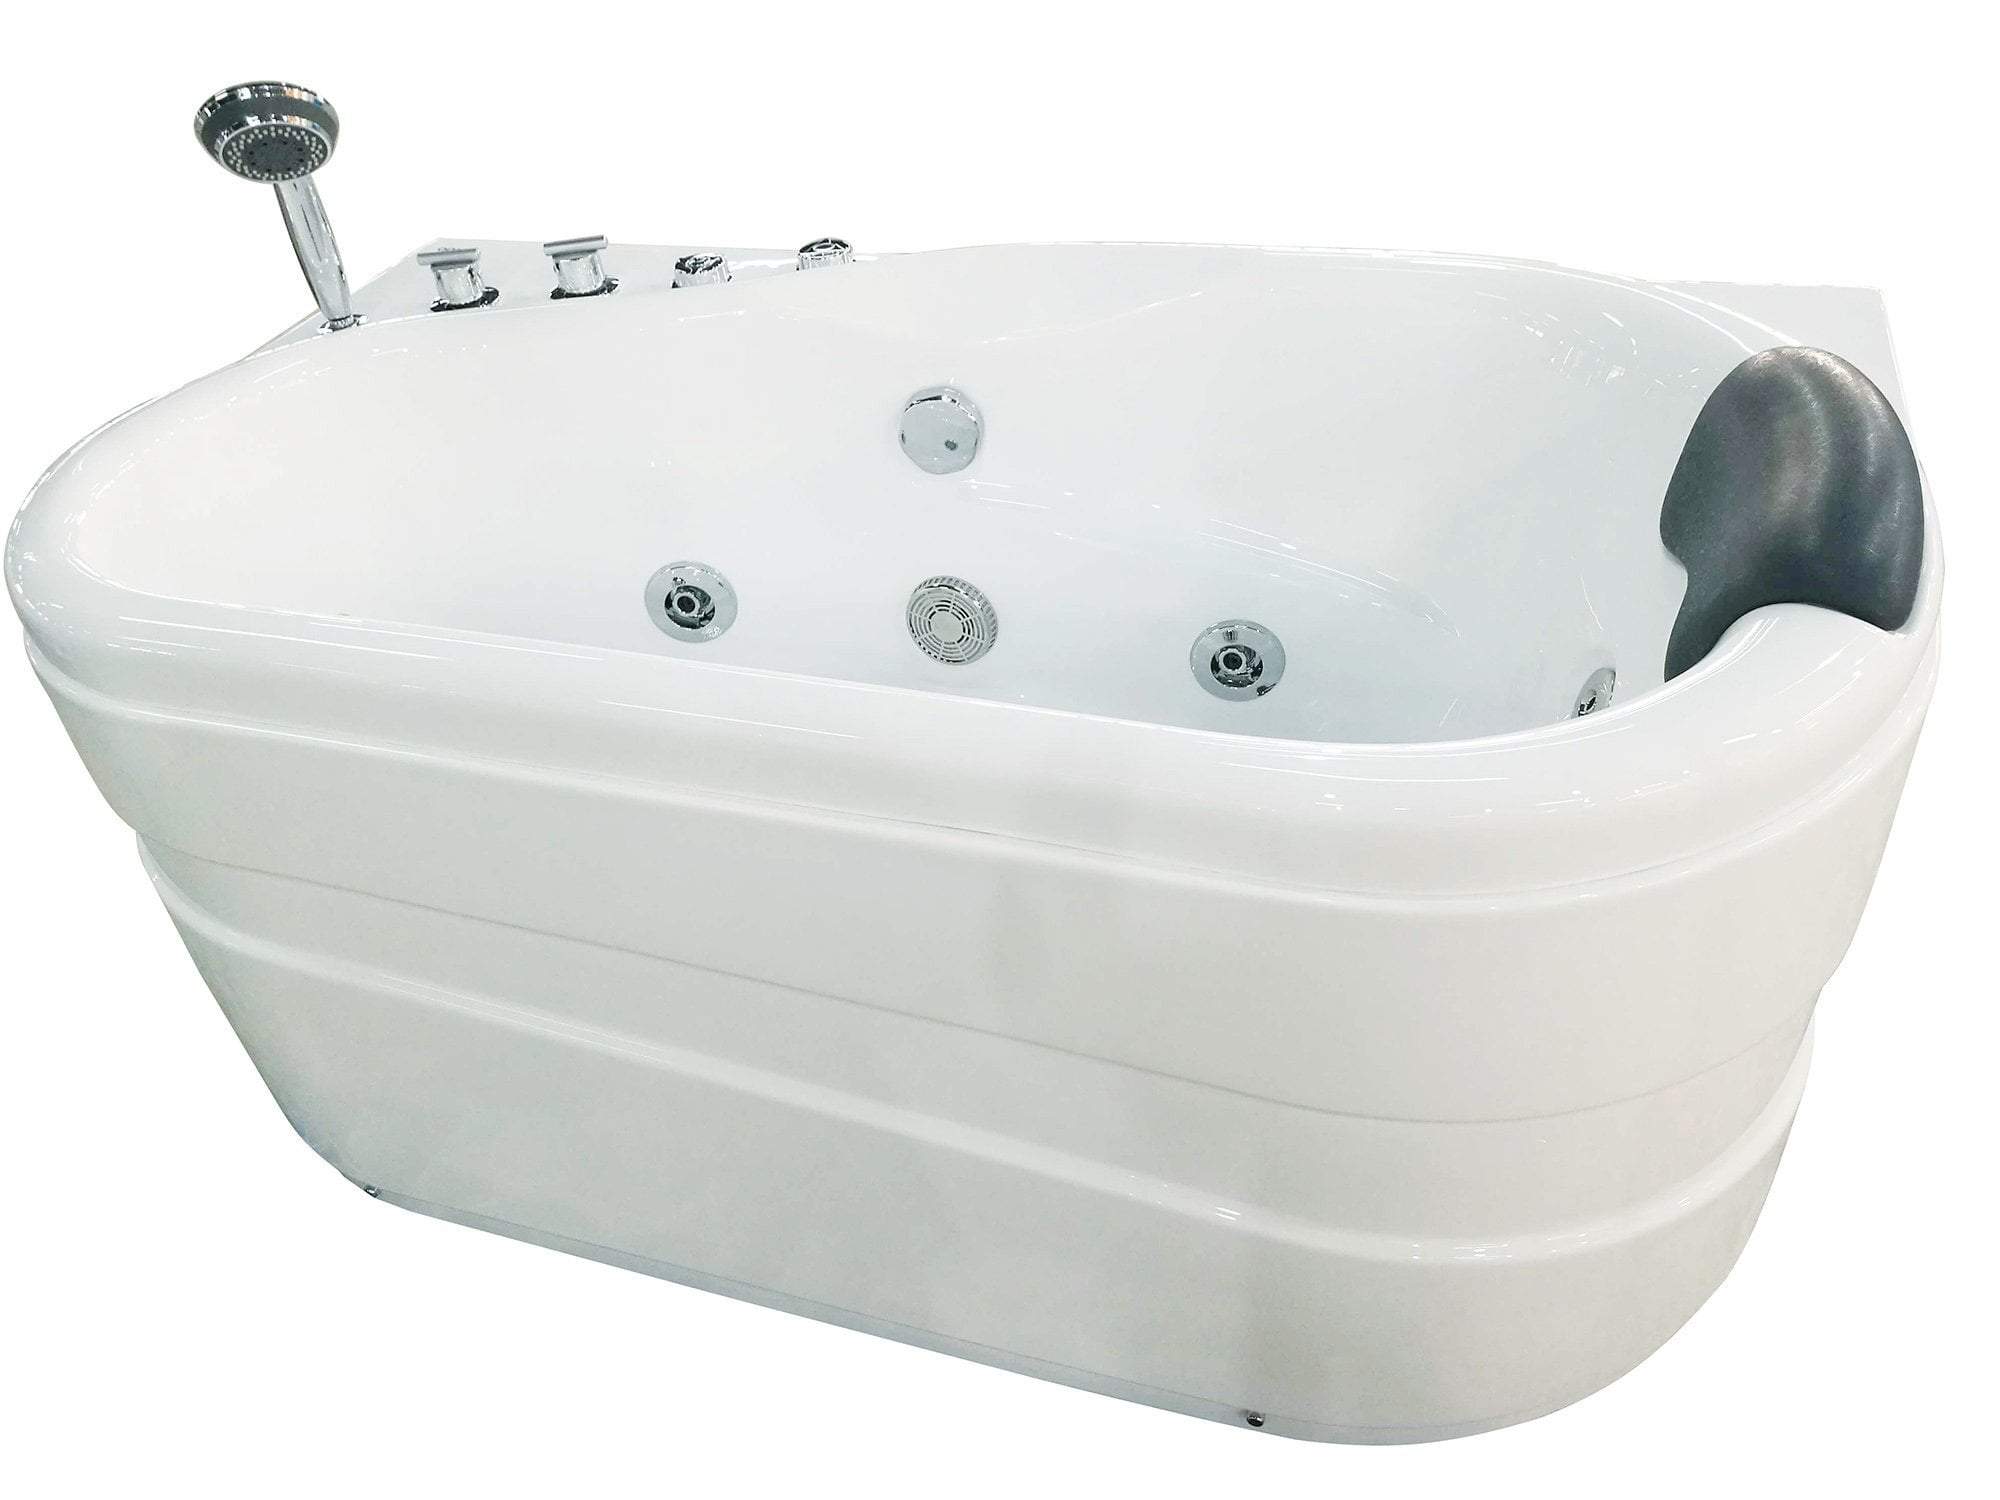 5'' White Acrylic Corner Whirpool Bathtub - Drain on Left